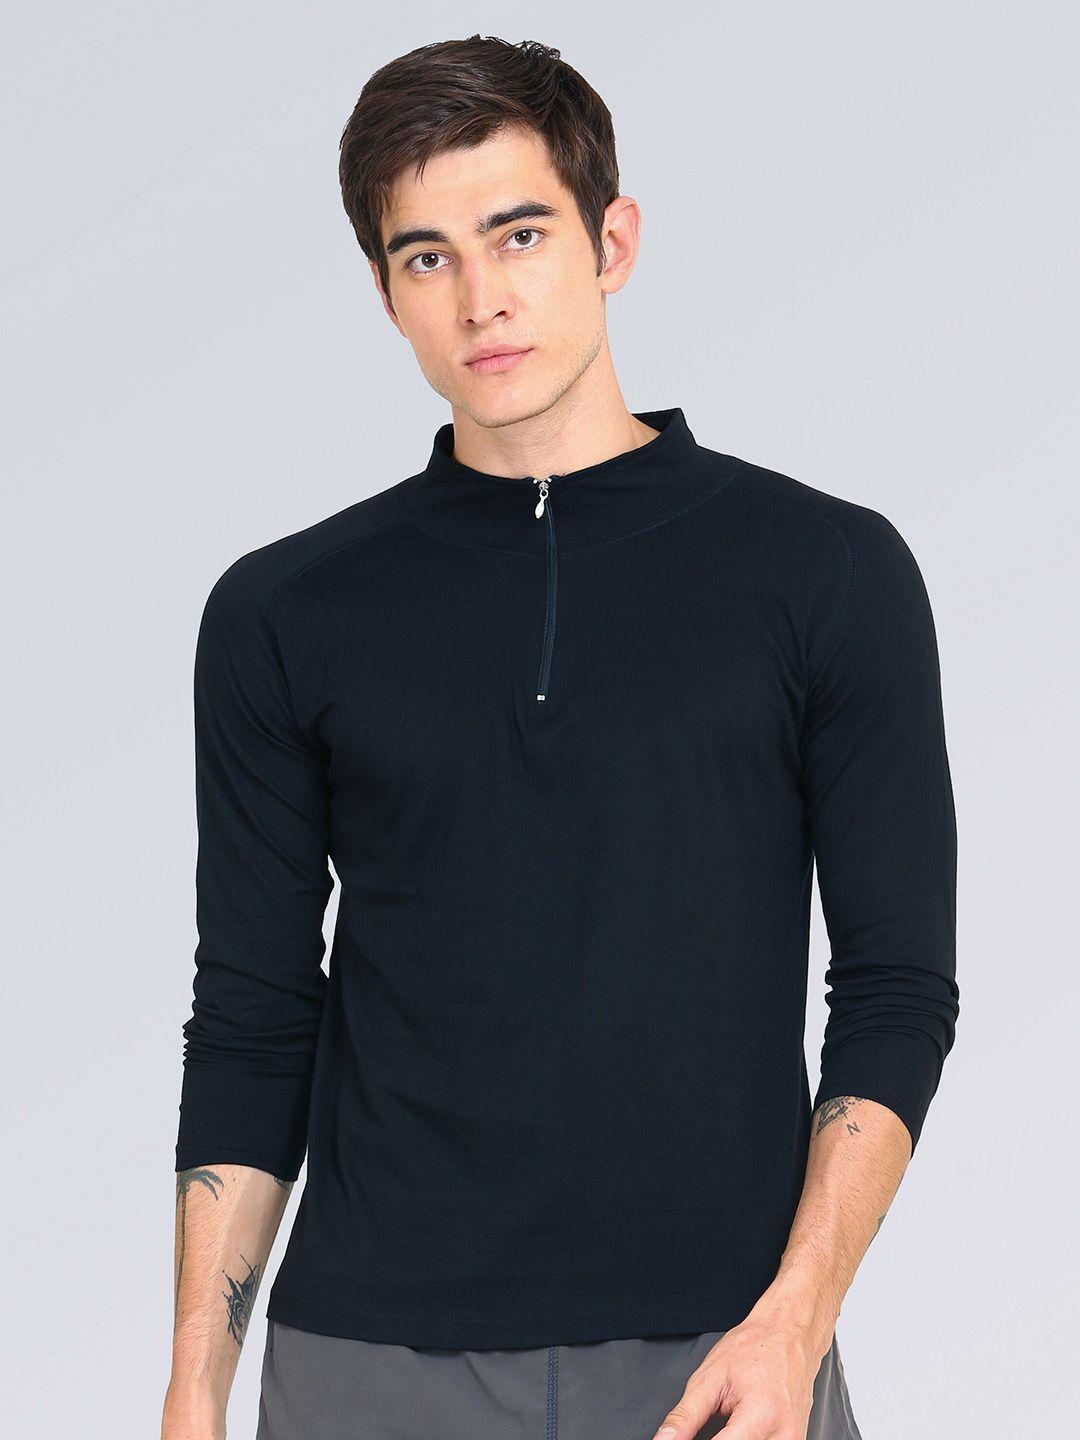 appulse-men-black-high-neck-pockets-t-shirt